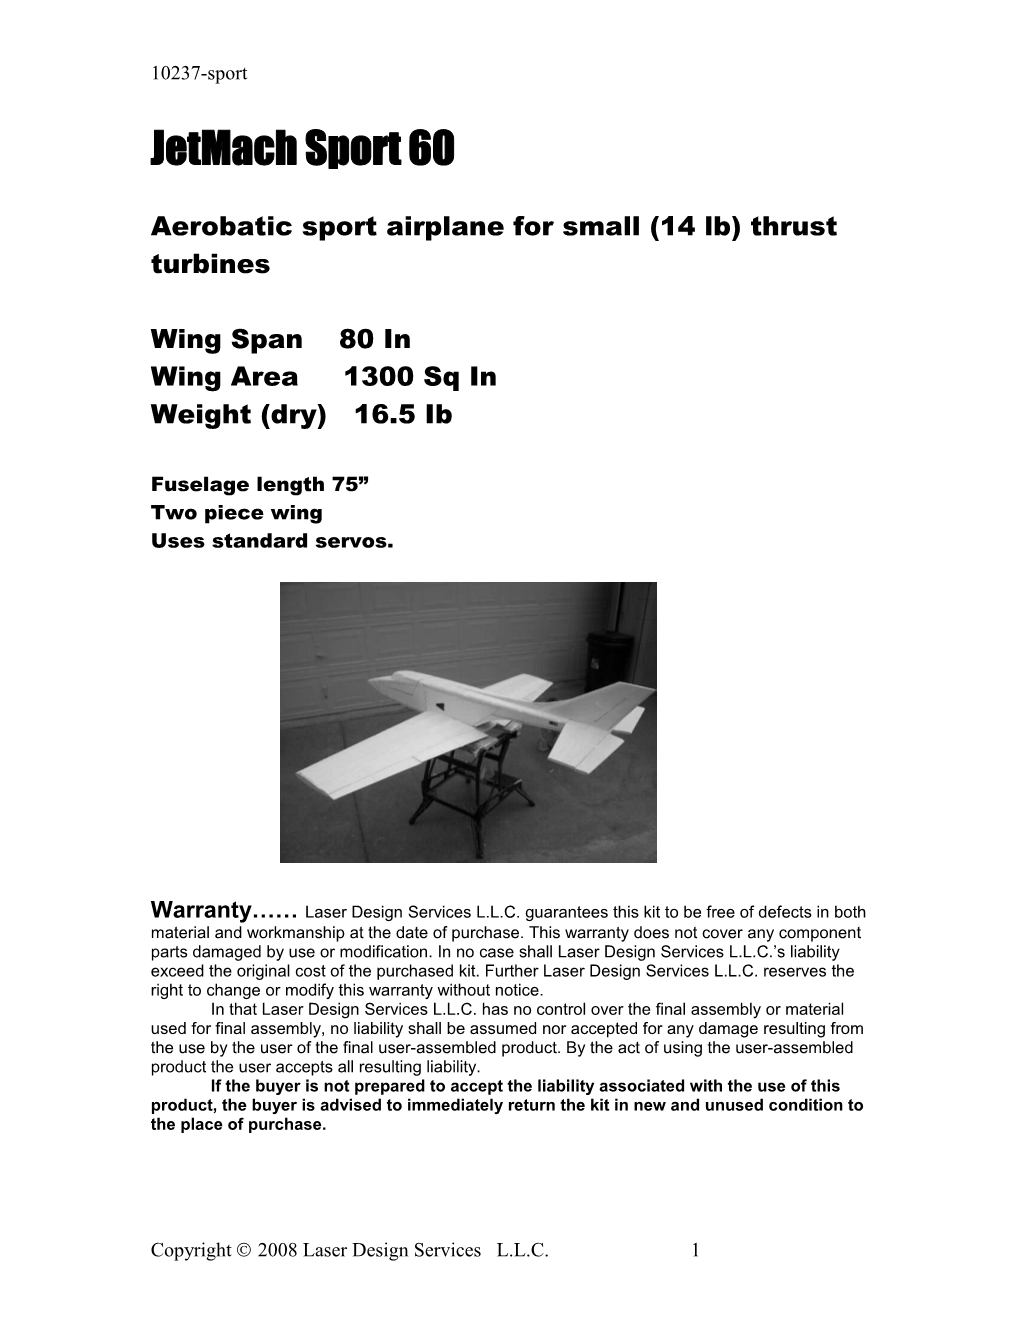 Aerobatic Sport Airplane for Small (14 Lb) Thrust Turbines